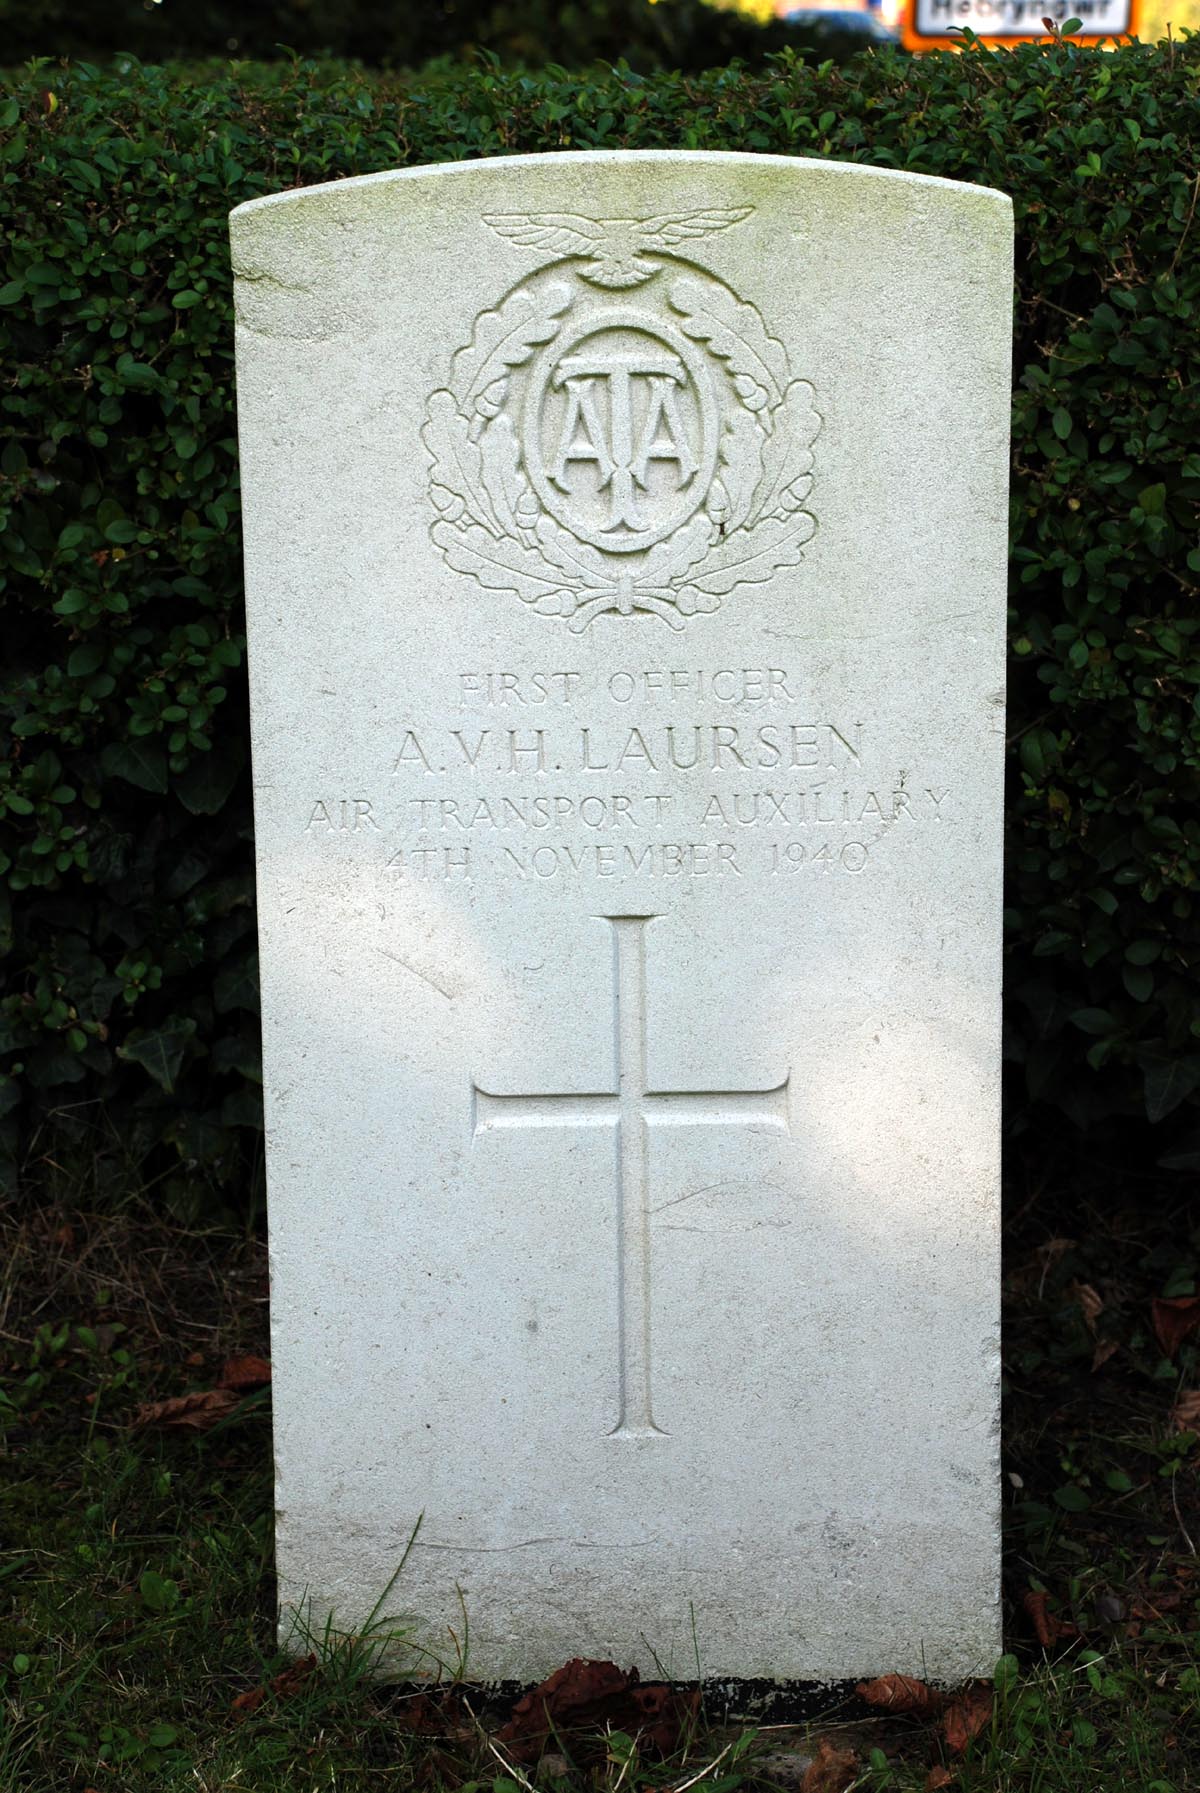 The headstone of Aage Valdemar Helstrup Laursen at Havarden (St. Deiniol) Churchyard.